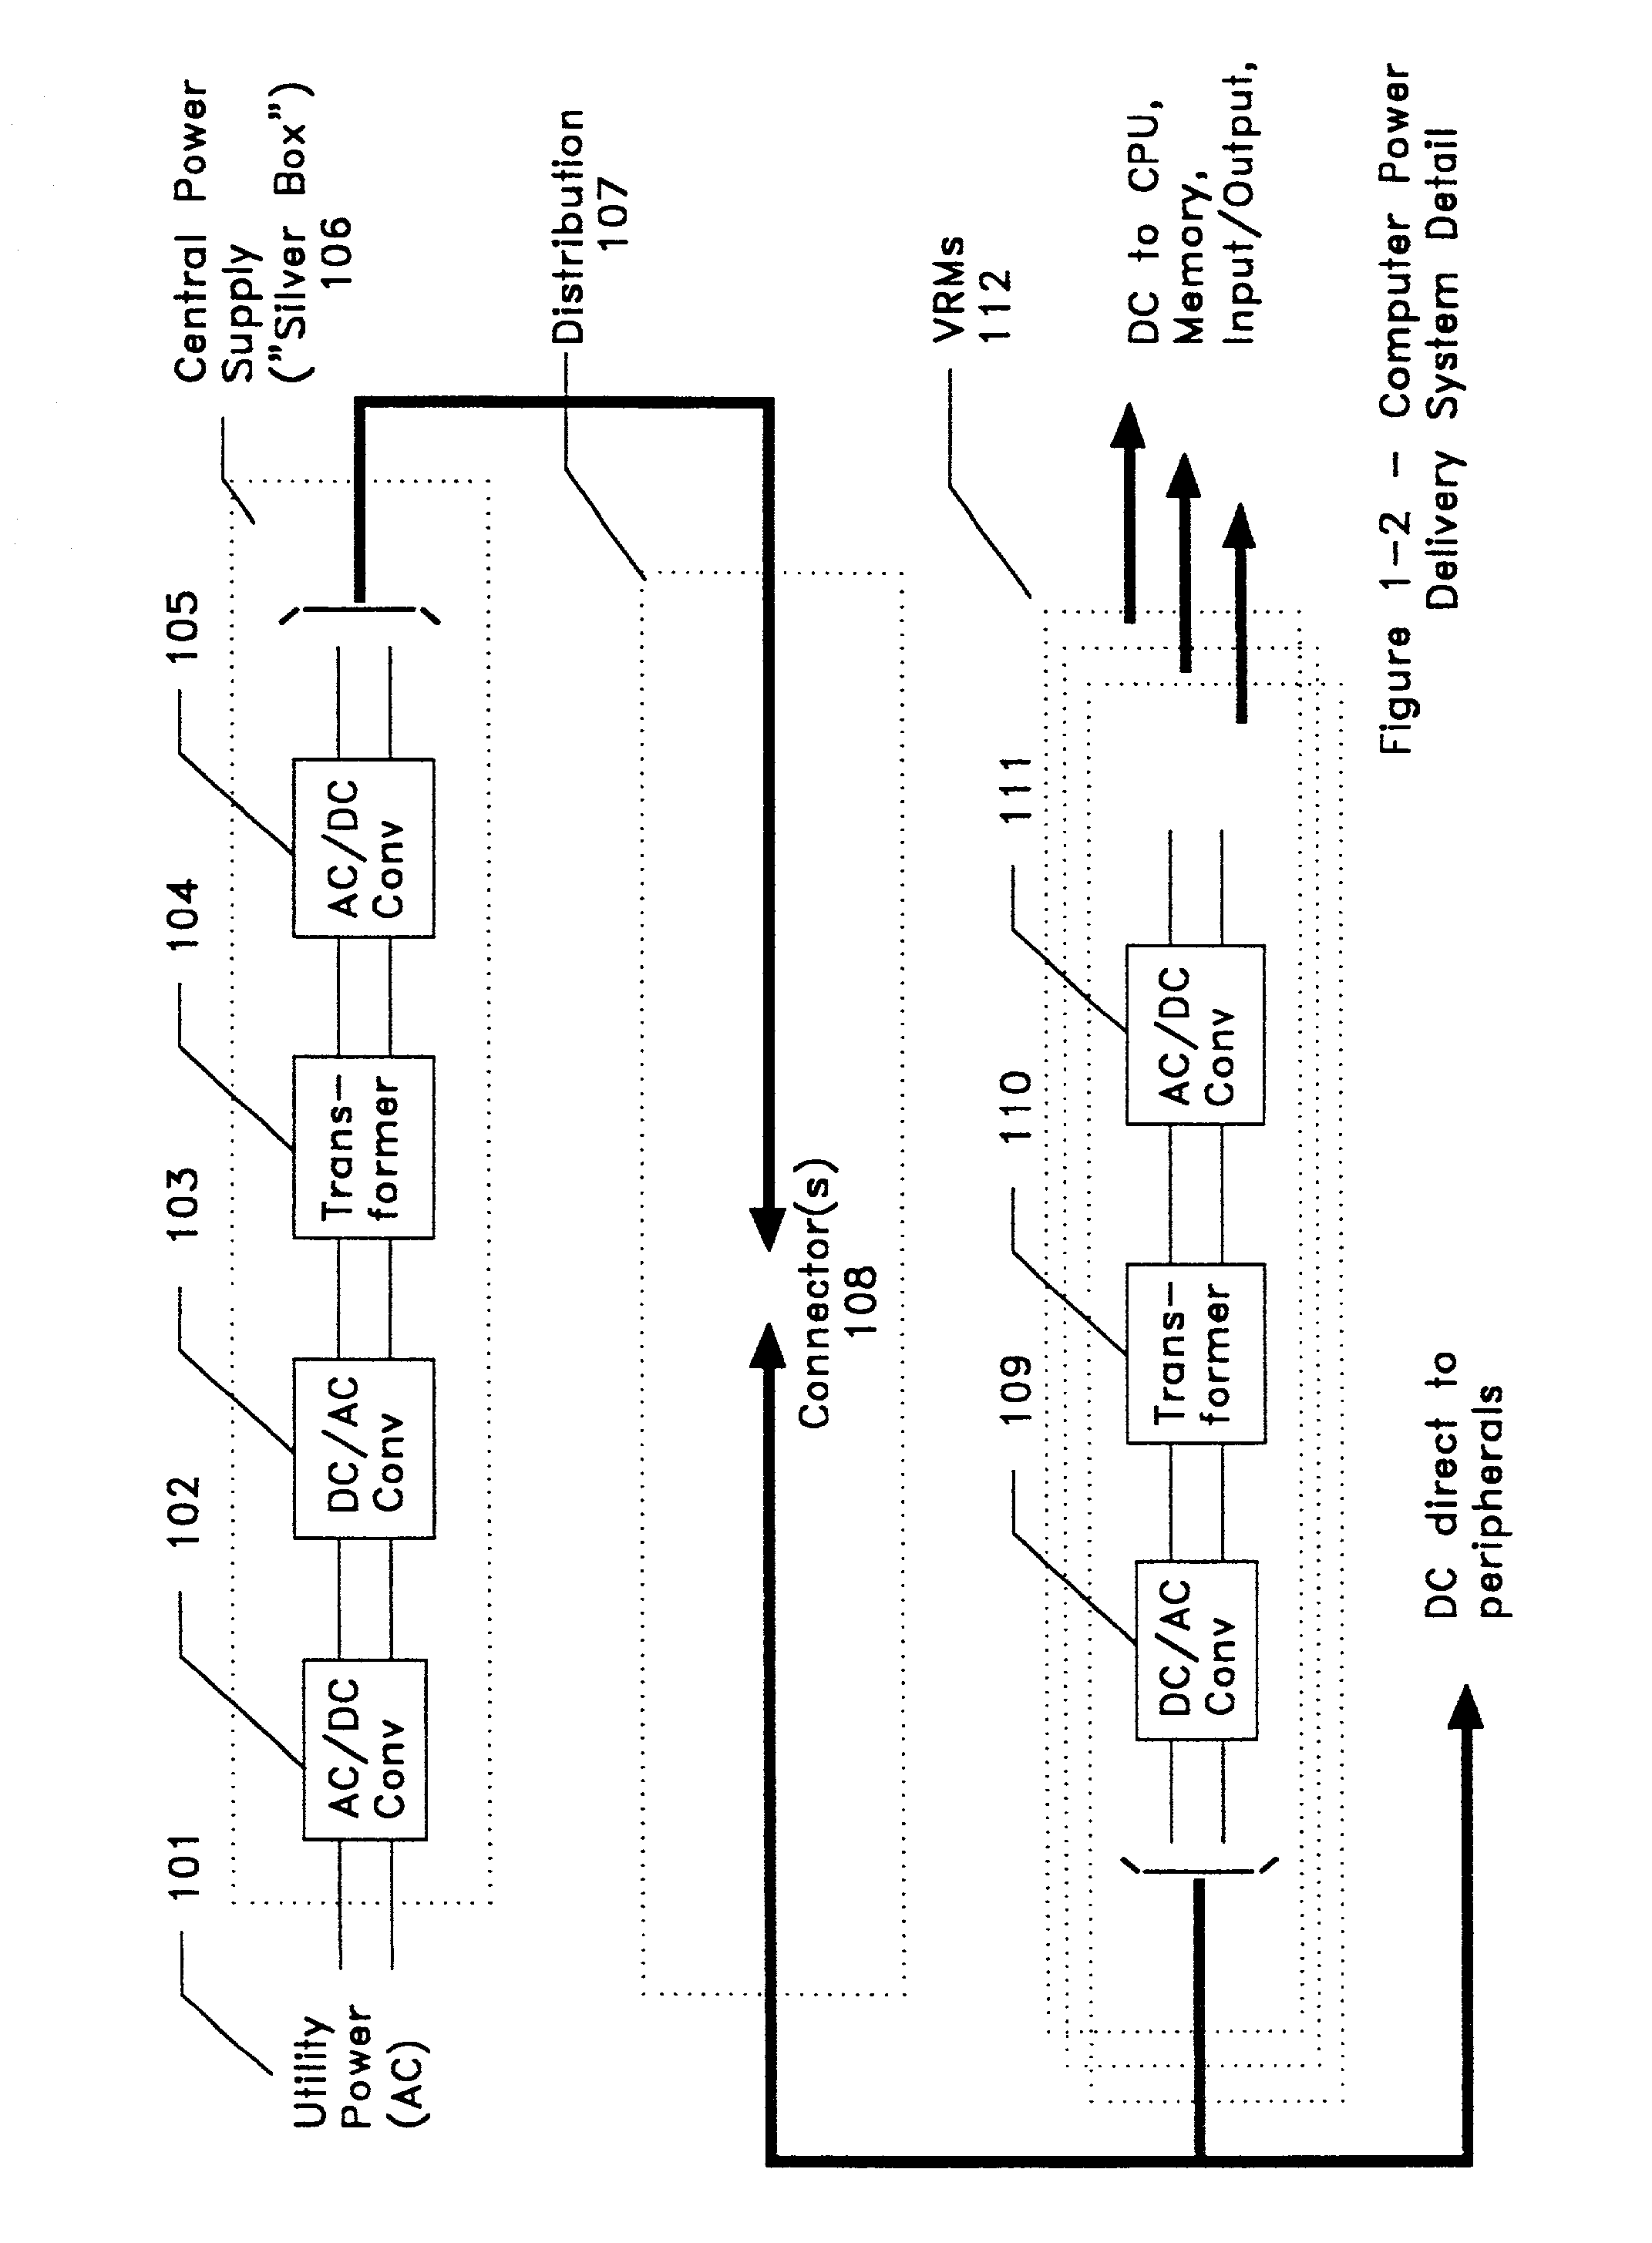 Multiple element rectification circuit